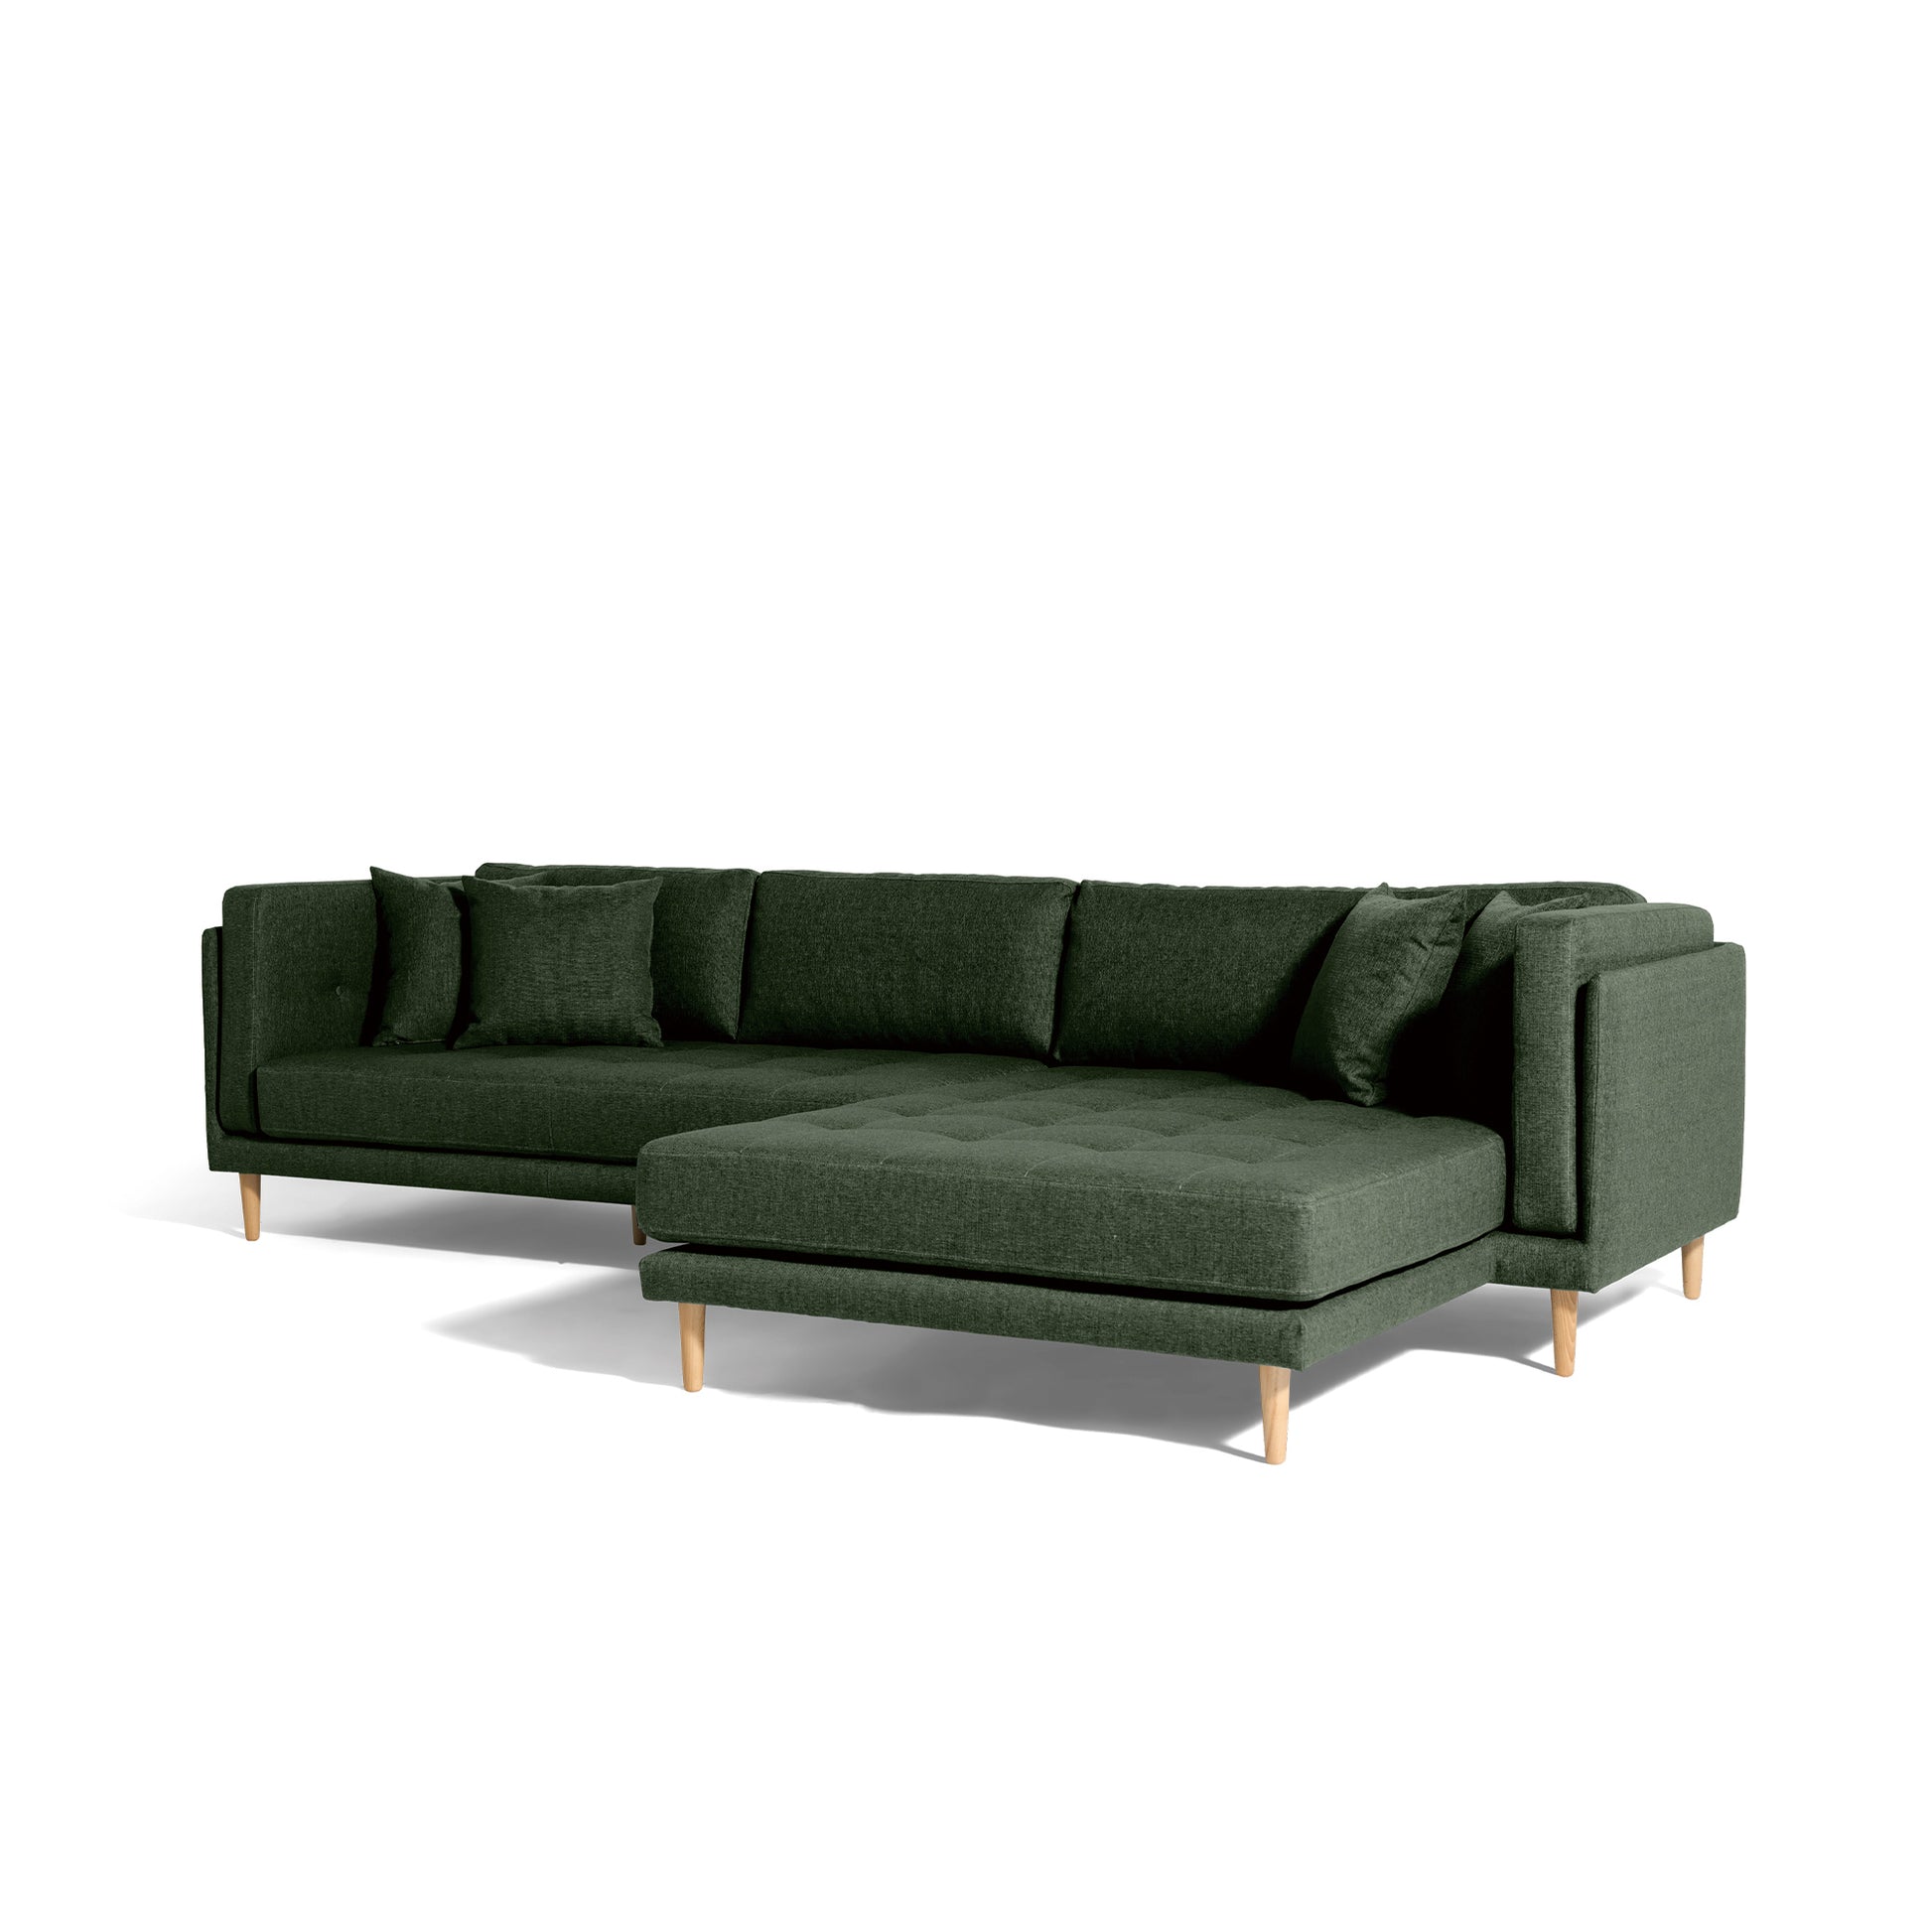 Cali højrevendt chaiselong sofa - Møbelkompagniet